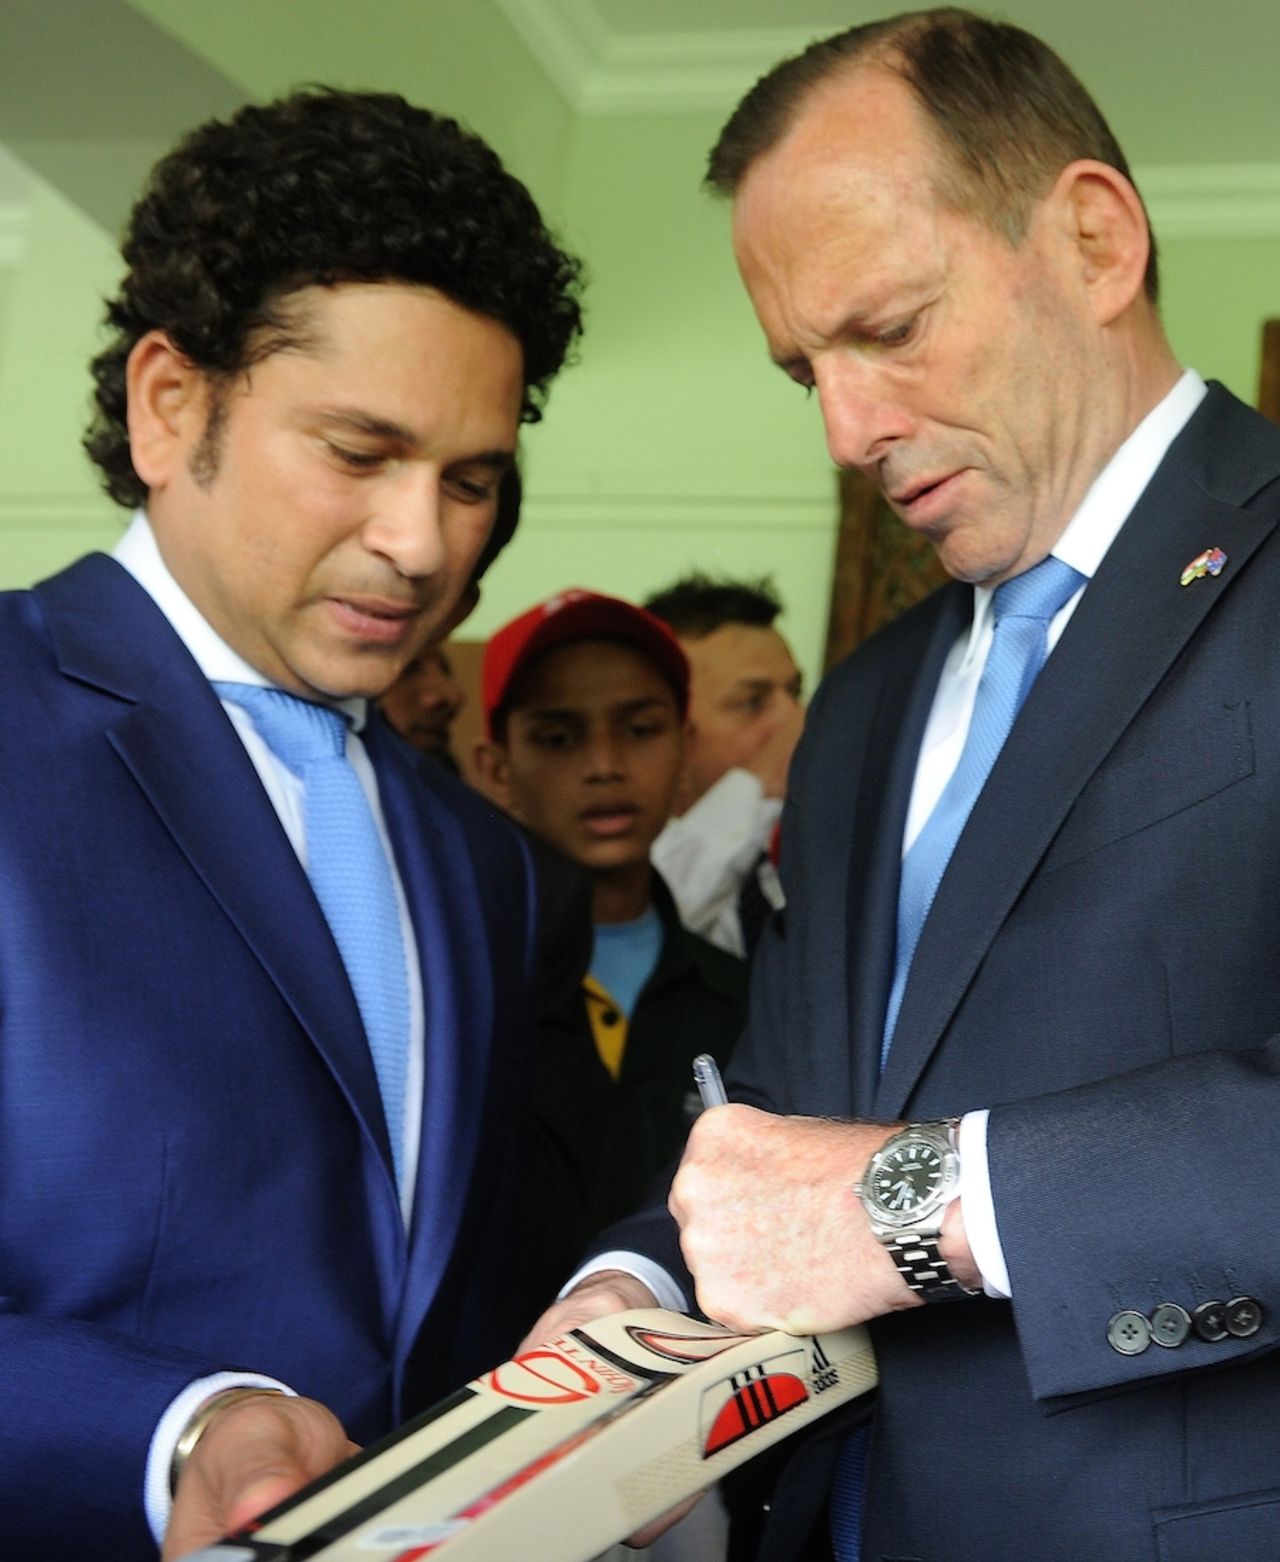 Cricket diplomacy: Sachin Tendulkar and Tony Abbott, Australia's prime minister, sign autographs, Mumbai, September 4, 2014